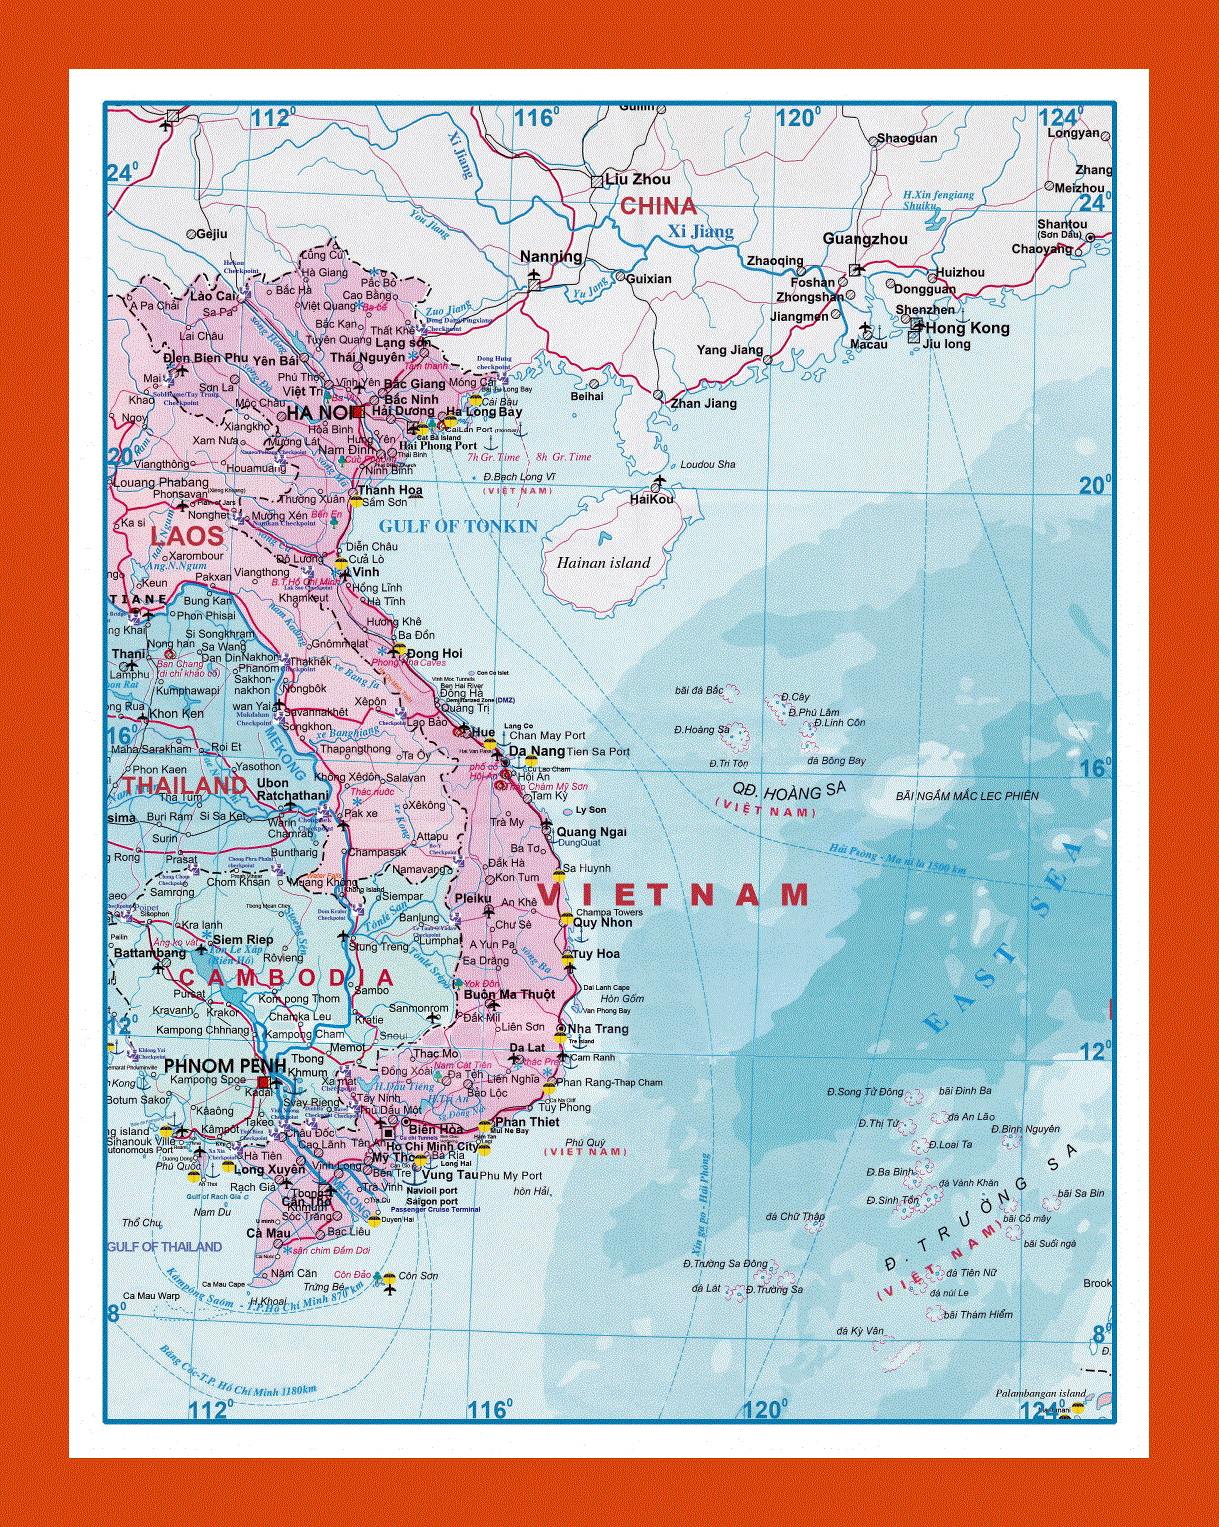 Tourist map of Vietnam and Laos